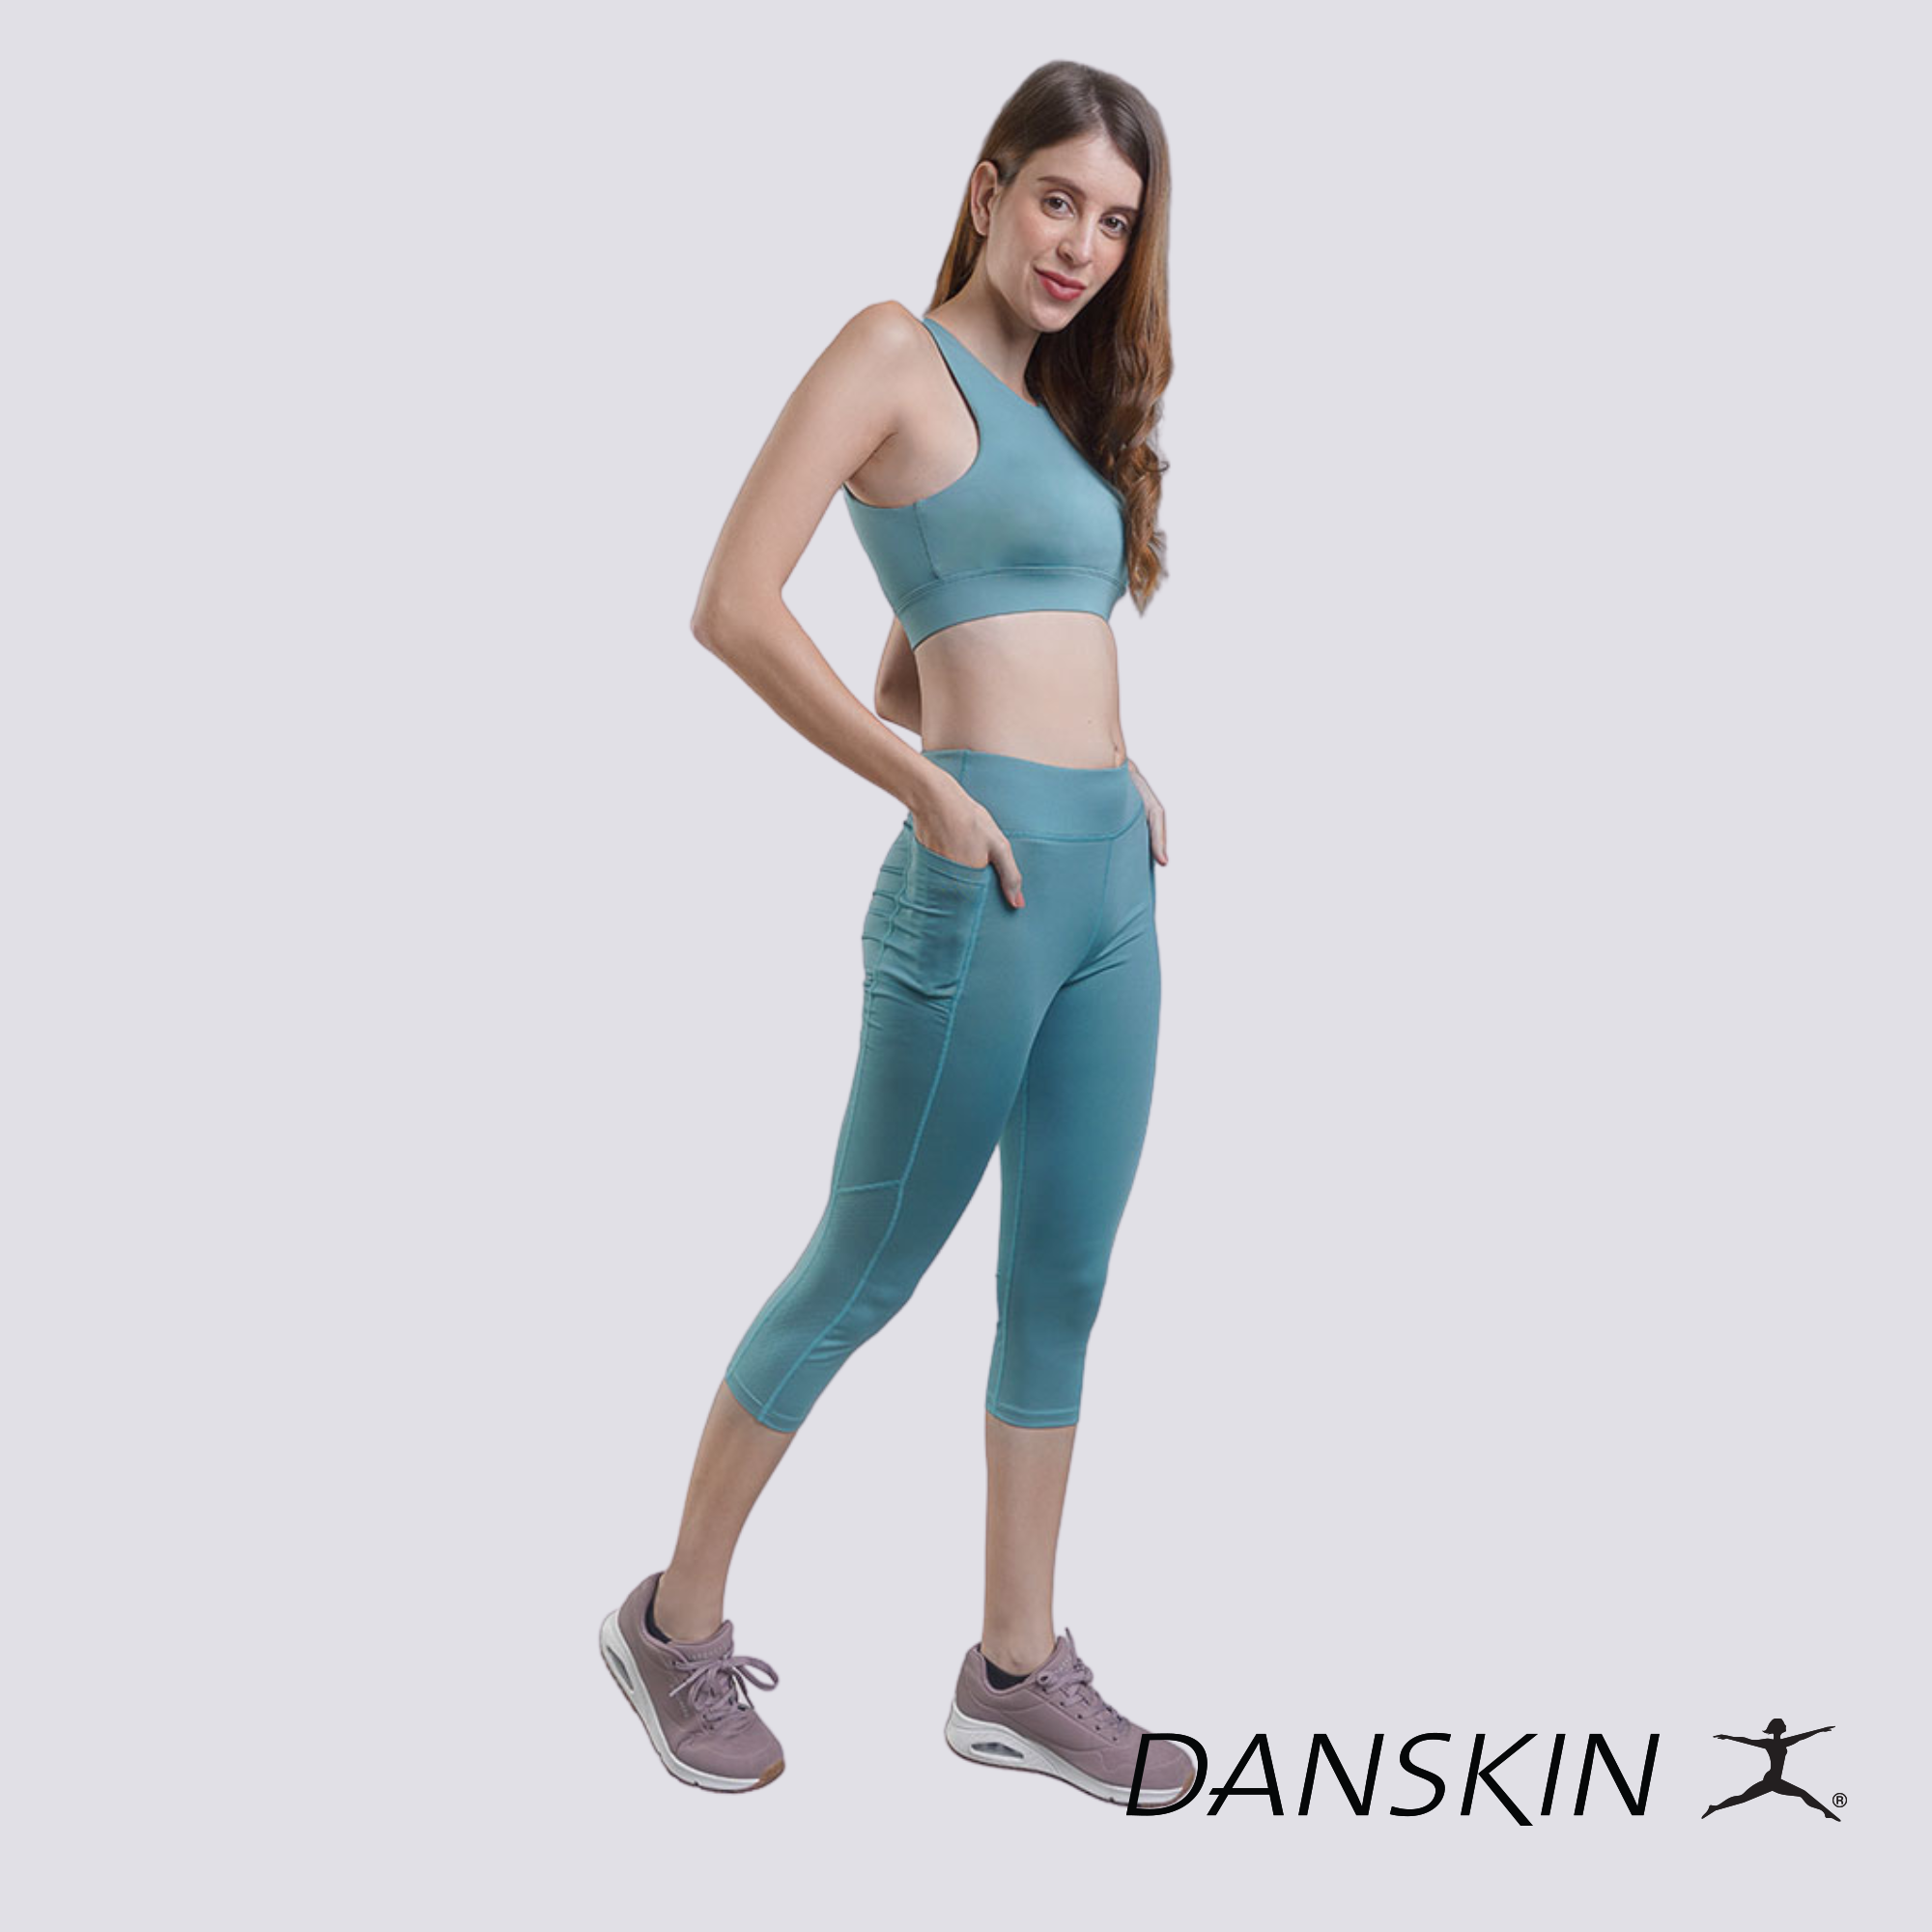 Danskin Goal Getter Medium Support Sports Bra with Removable Pads Women  Activewear